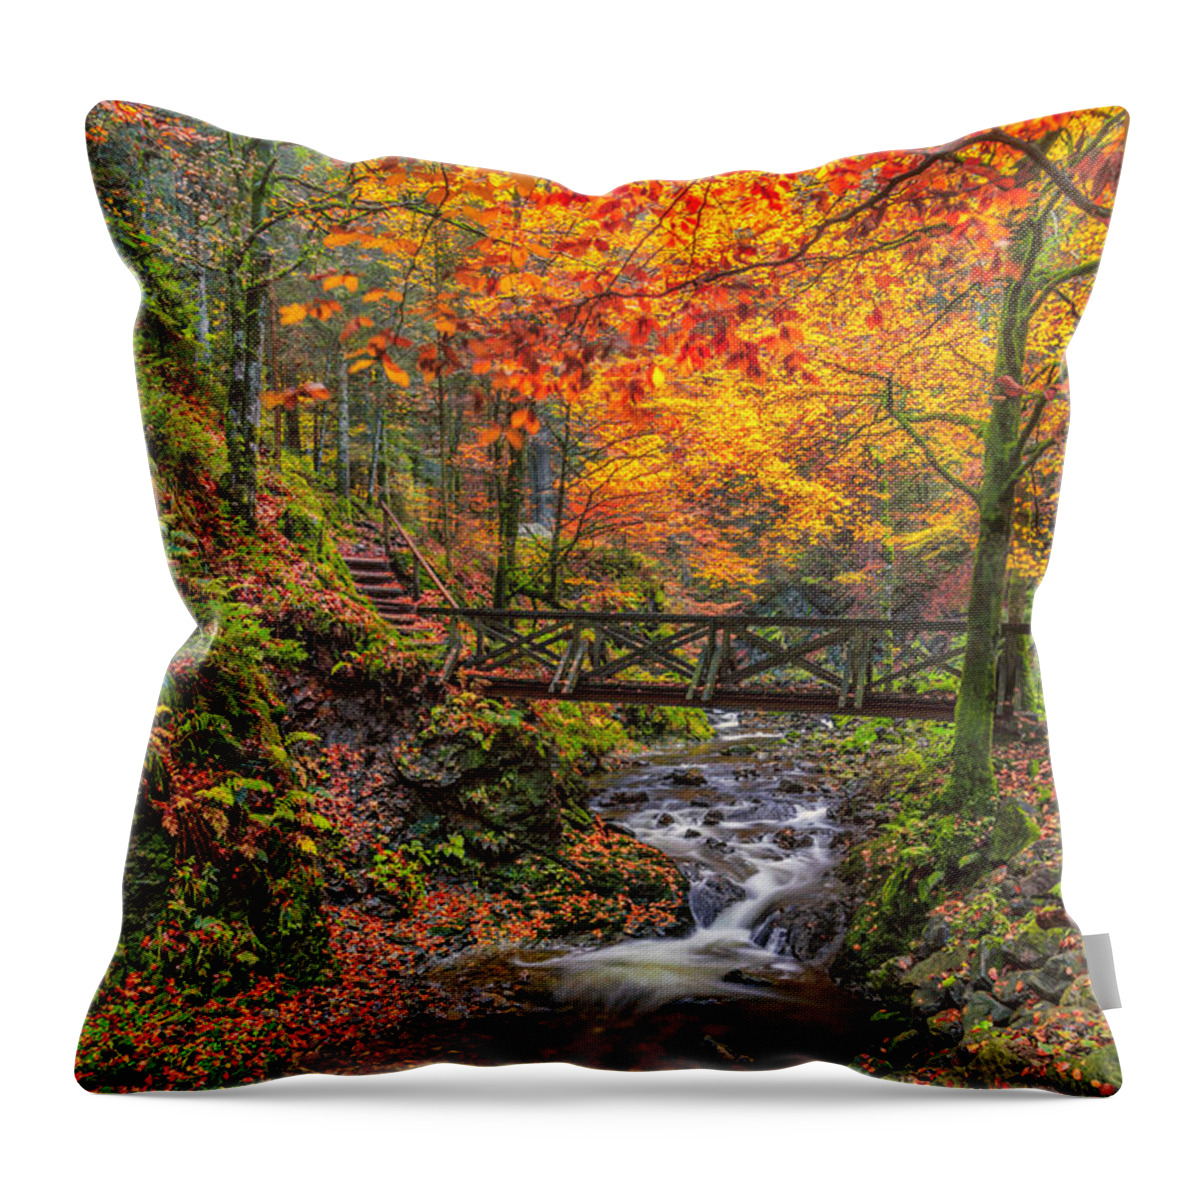 Ravenna-gorge Throw Pillow featuring the photograph Cascades and Waterfalls by Bernd Laeschke